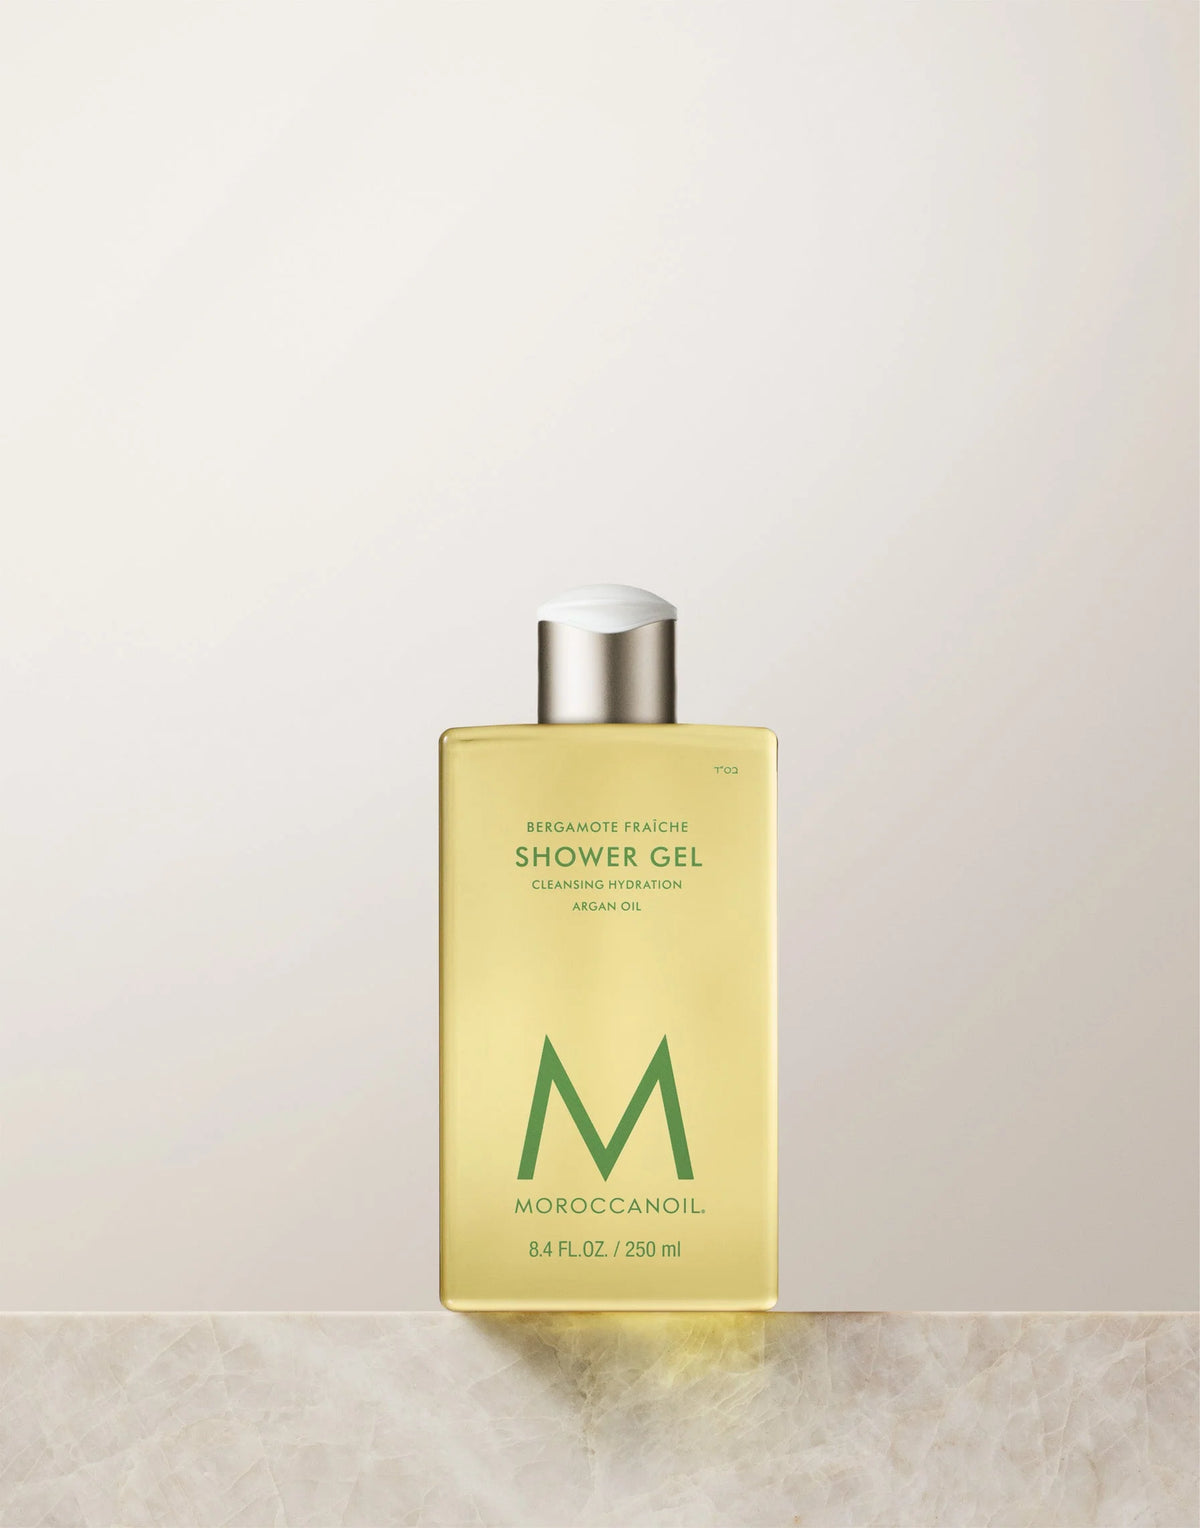 Moroccanoil Shower Gel Bergamote Fraiche 250ml